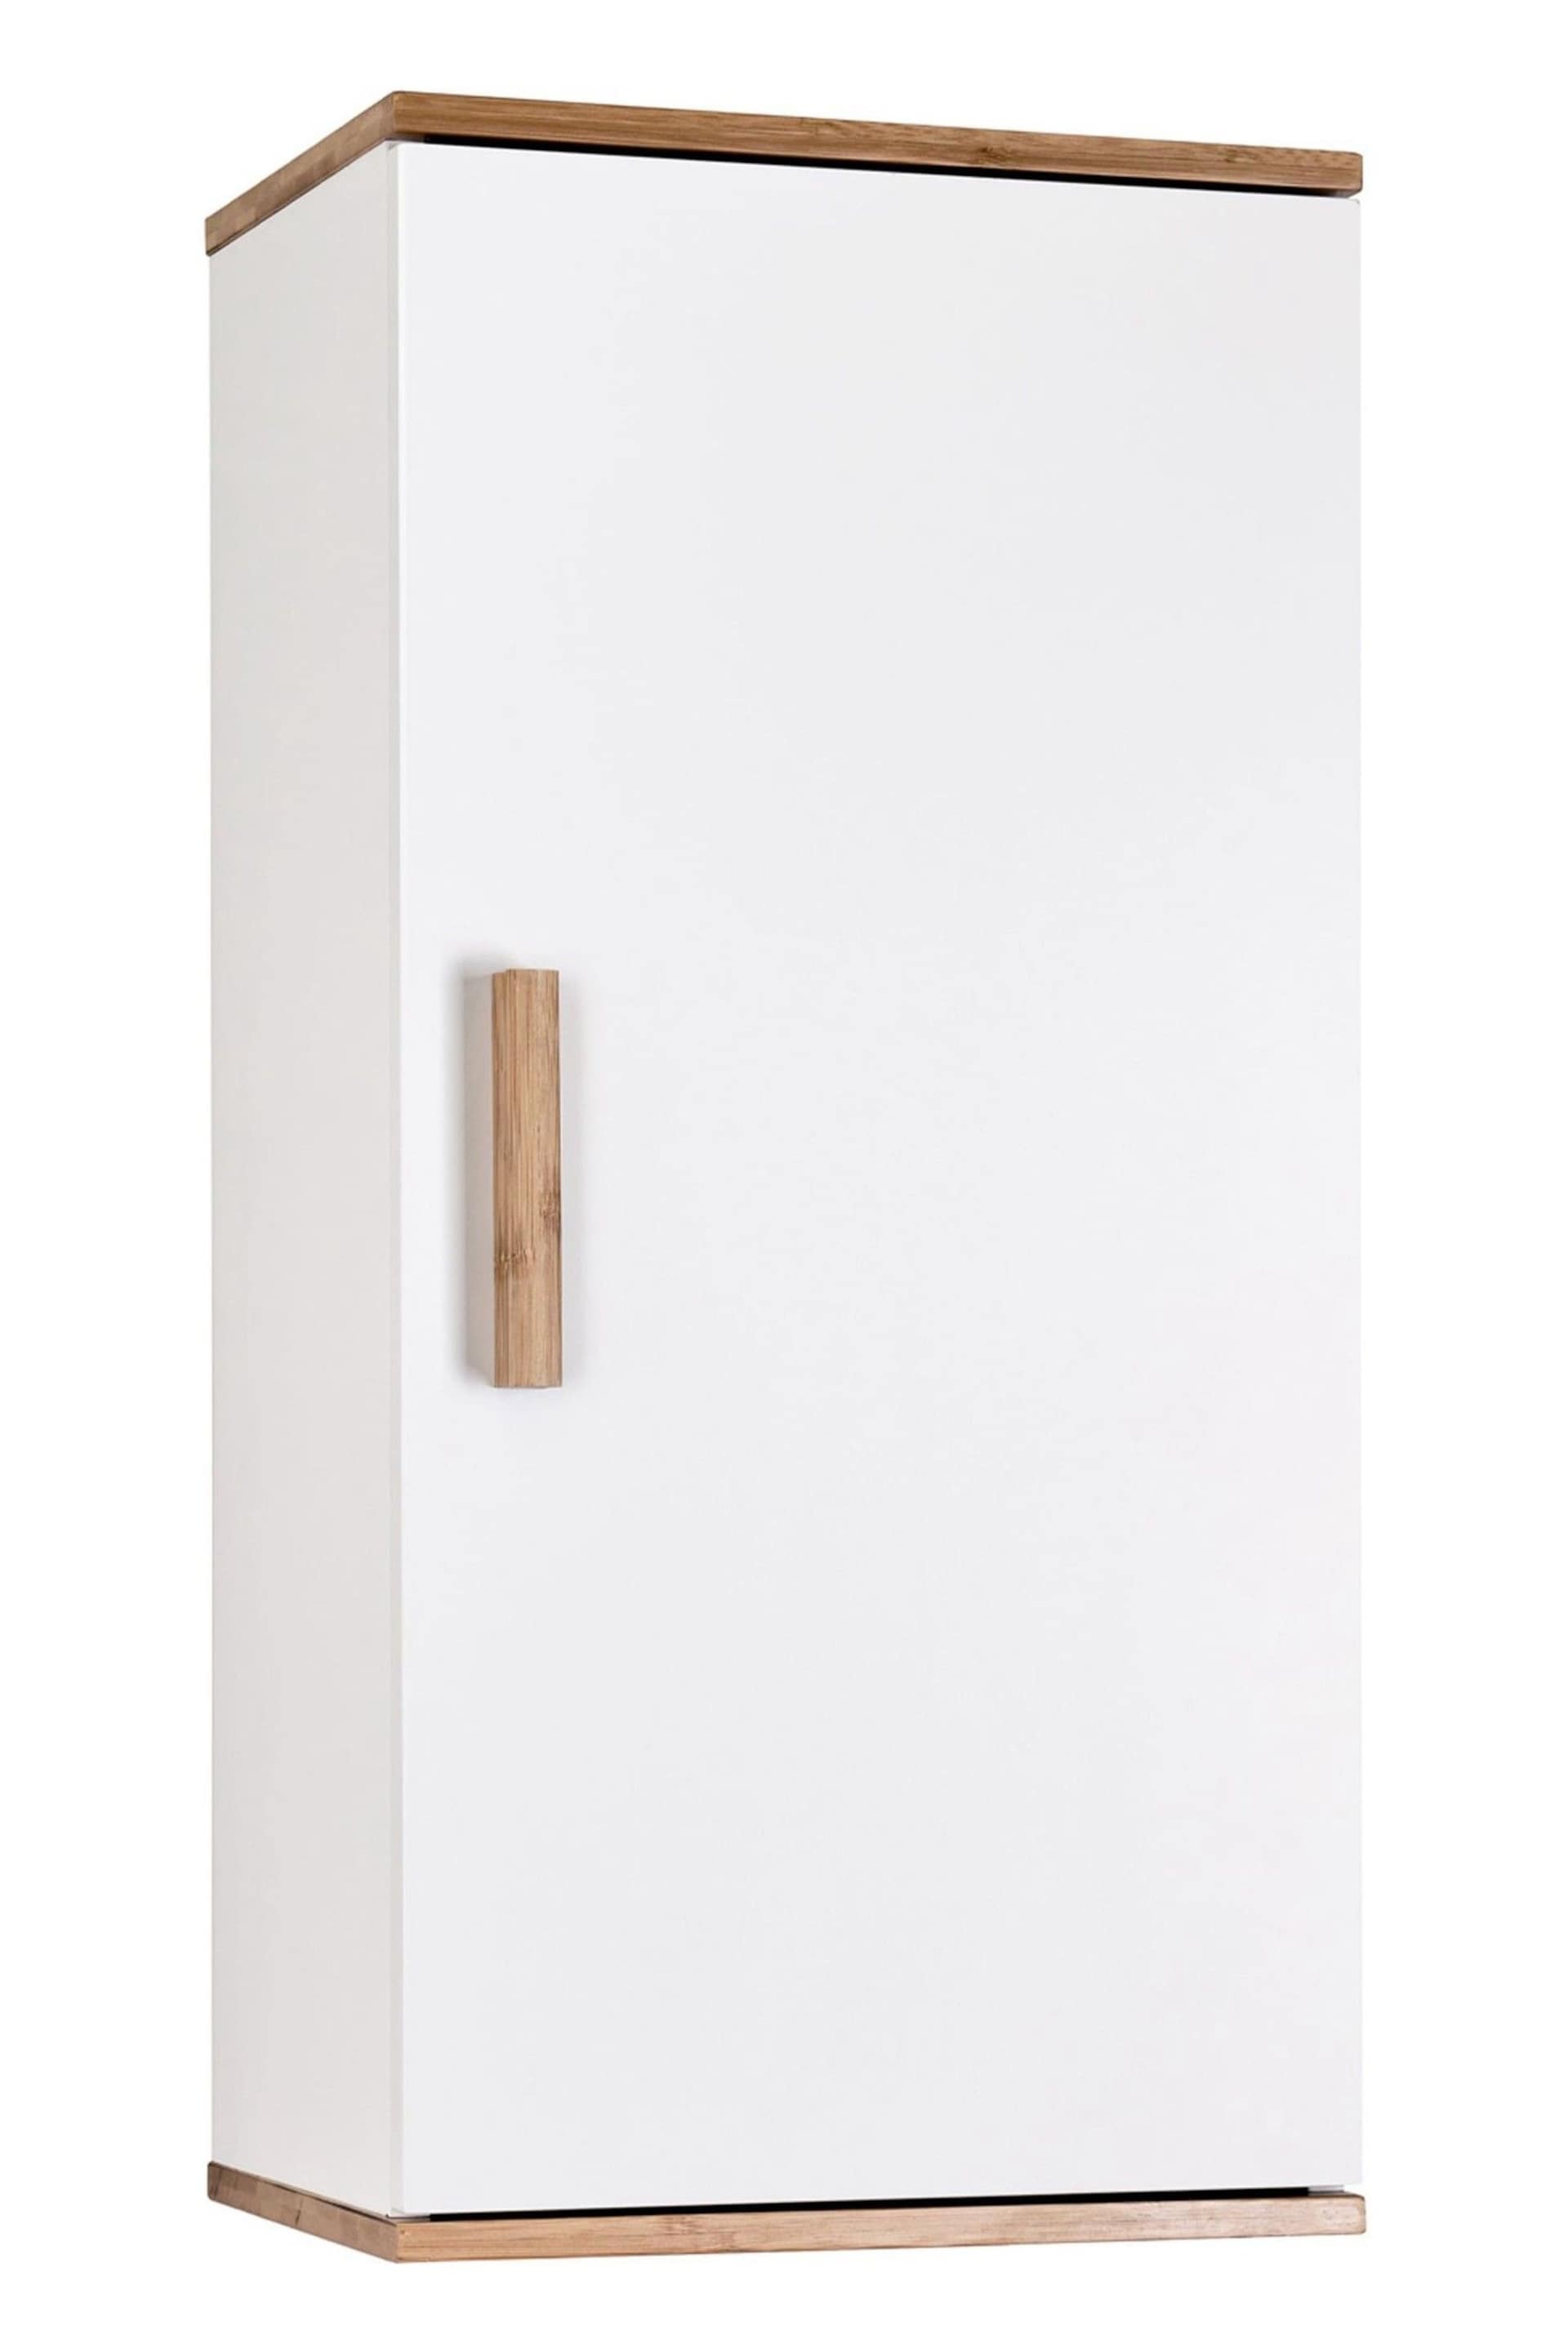 Showerdrape White Nola Bamboo Wall Cabinet - Image 4 of 4